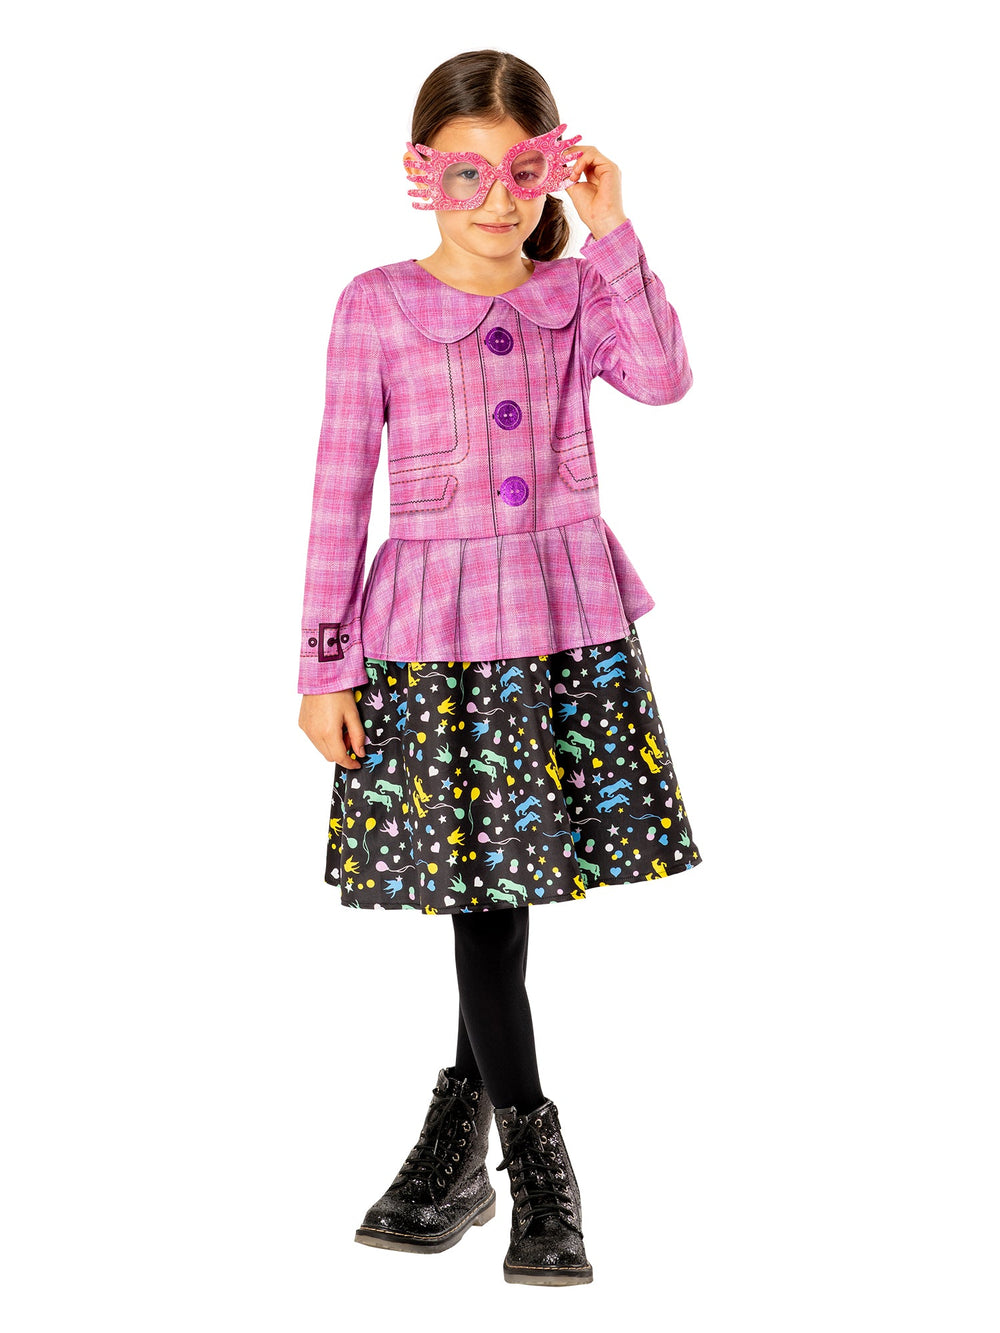 Luna Lovegood Costume with Glasses Girls Harry Potter Dress_2